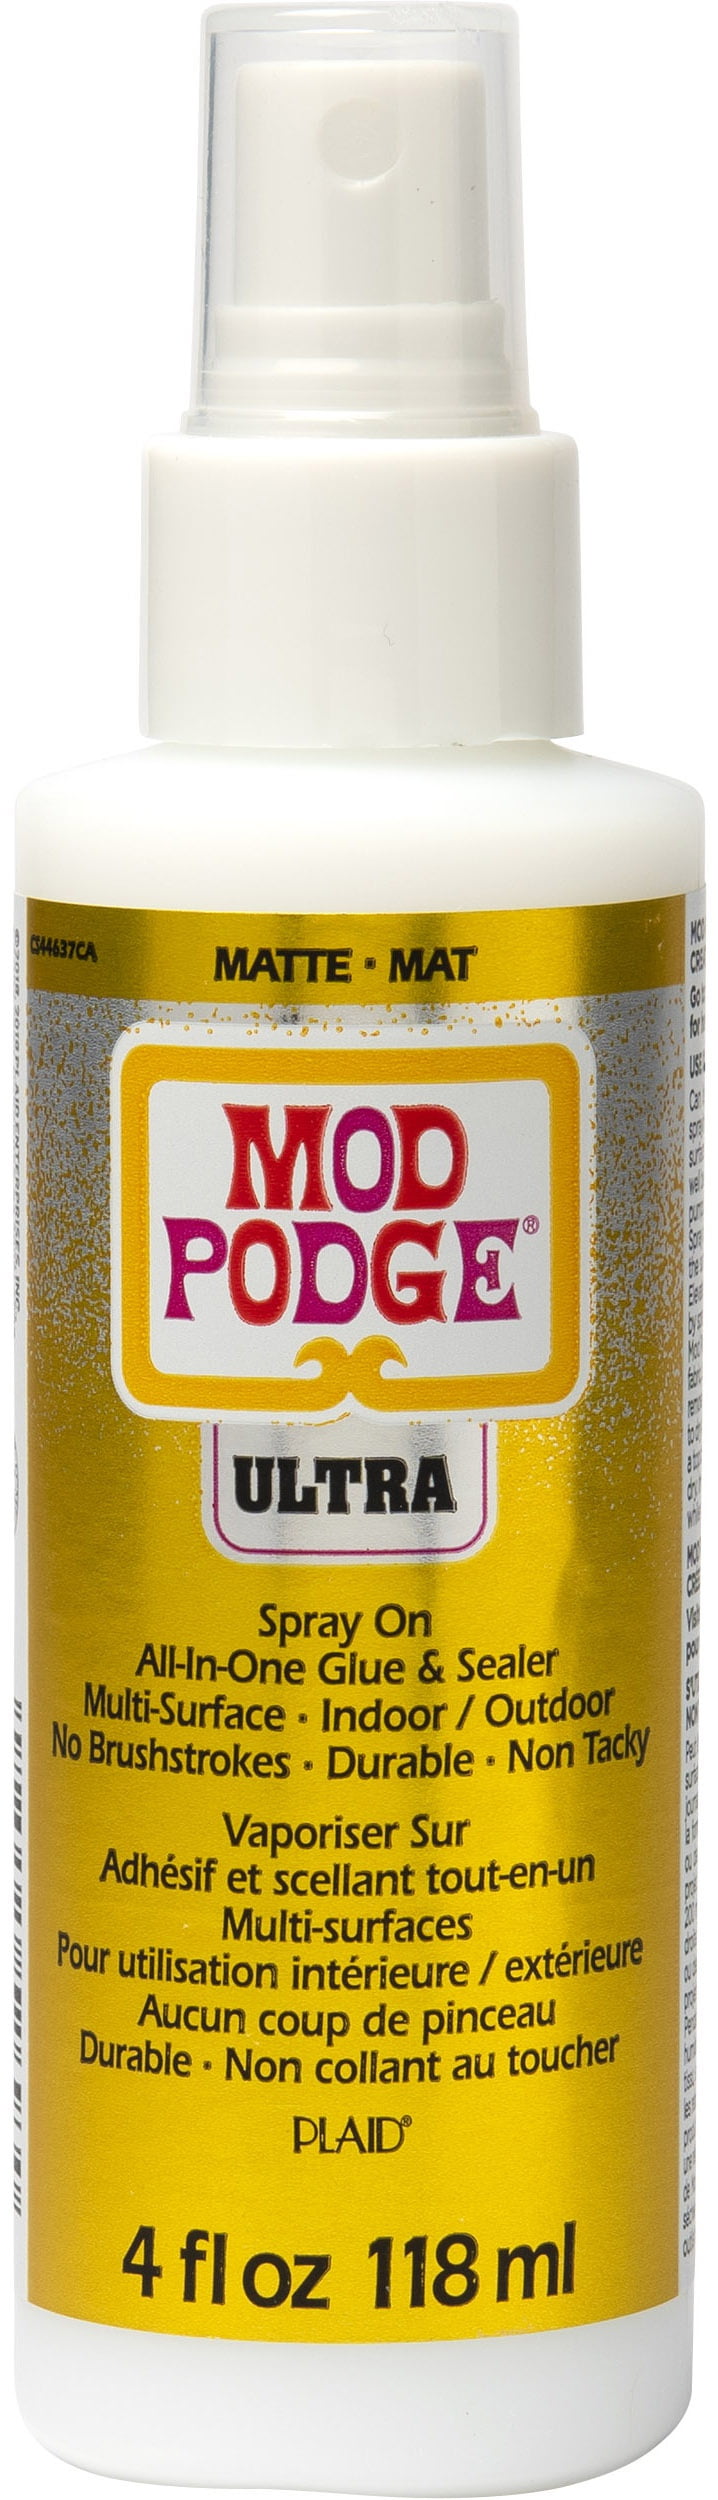 Mod Podge Pearlized Spray Sealer-11oz, 1 count - Fred Meyer